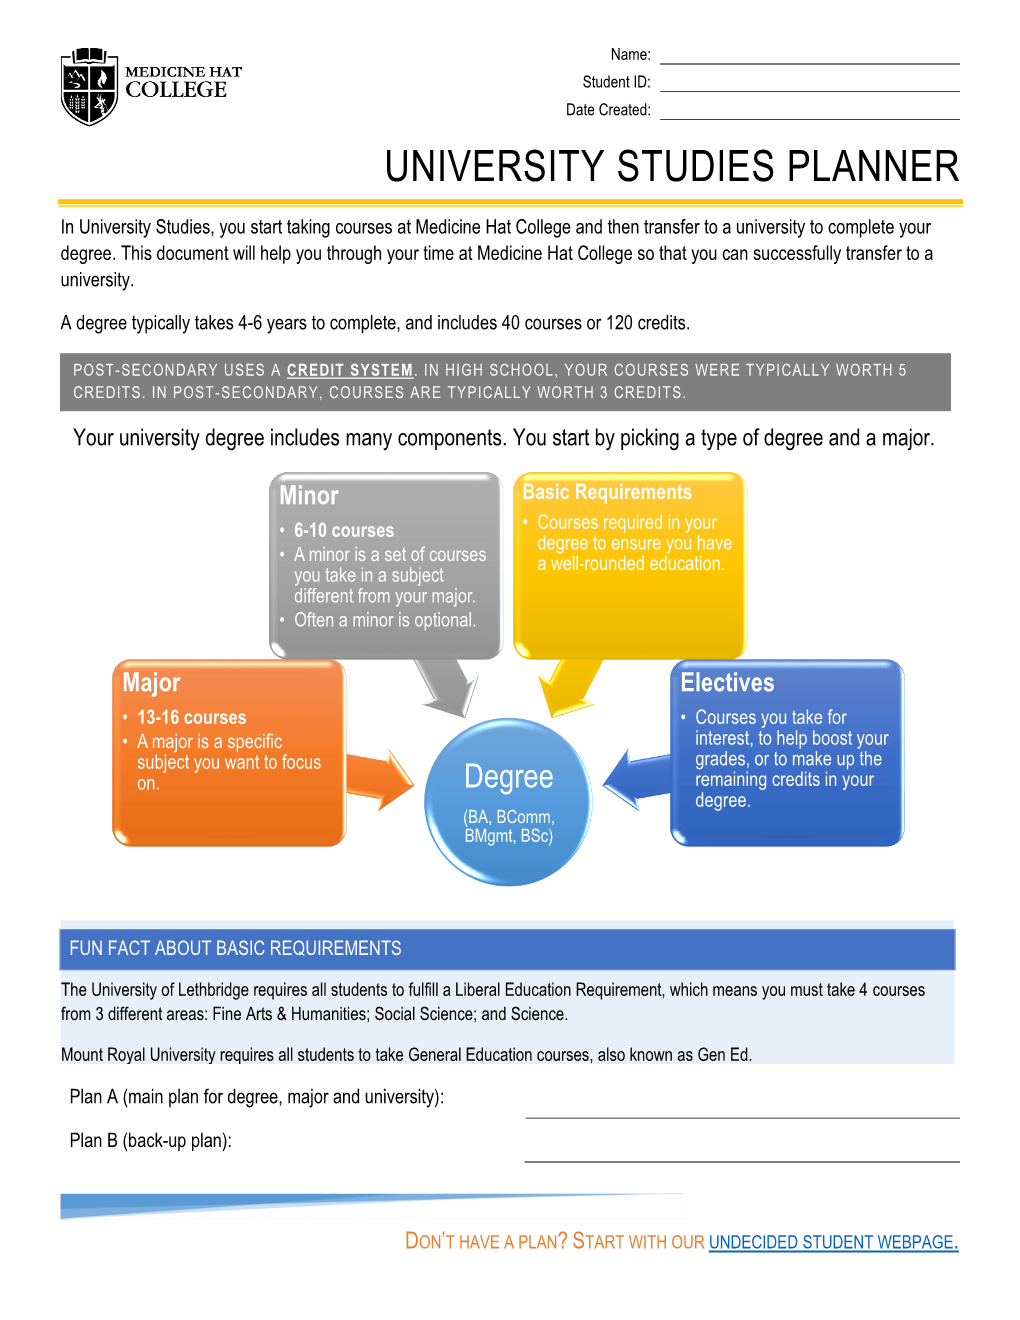 University Studies Planner